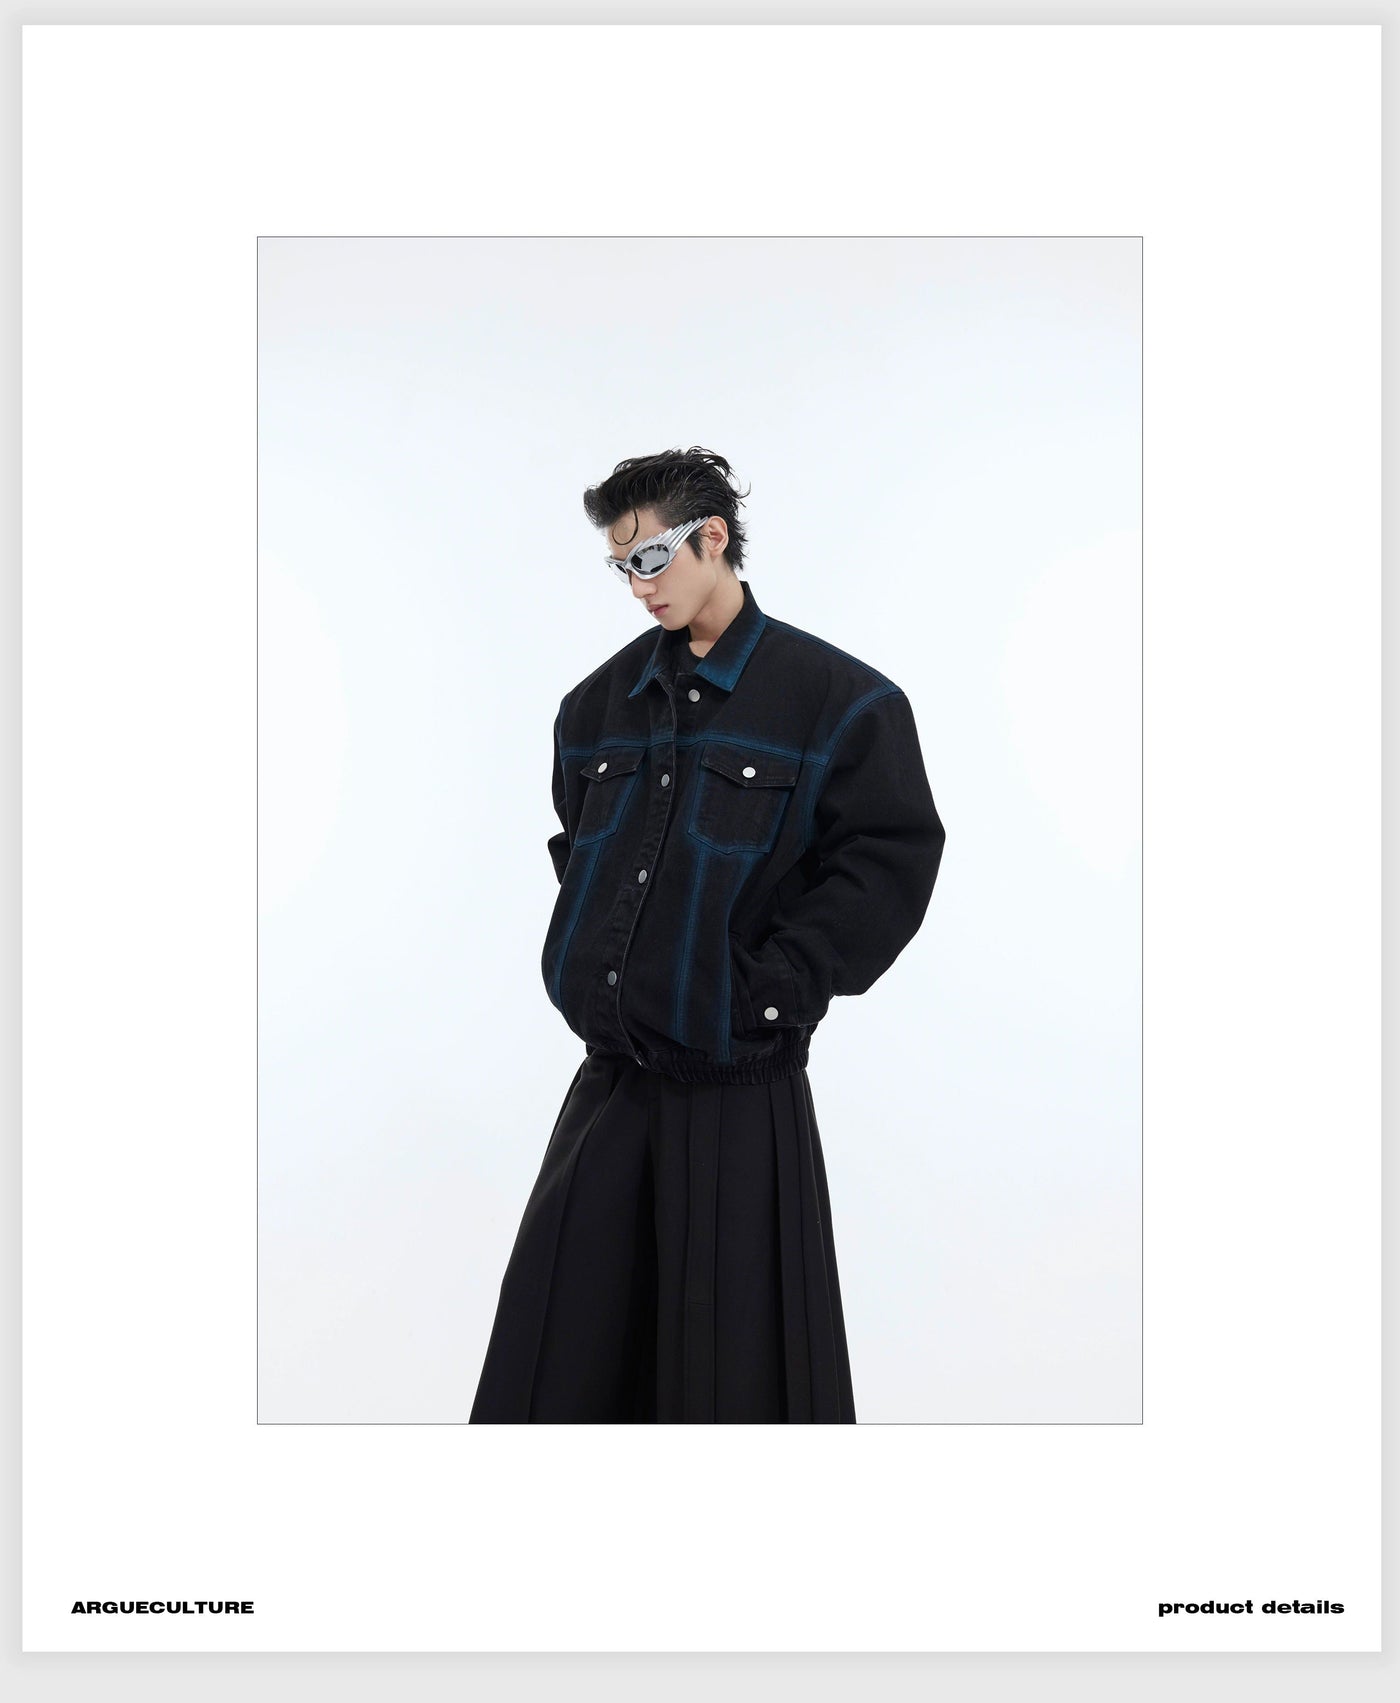 Outline Paint Tint Denim Jacket Korean Street Fashion Jacket By Argue Culture Shop Online at OH Vault